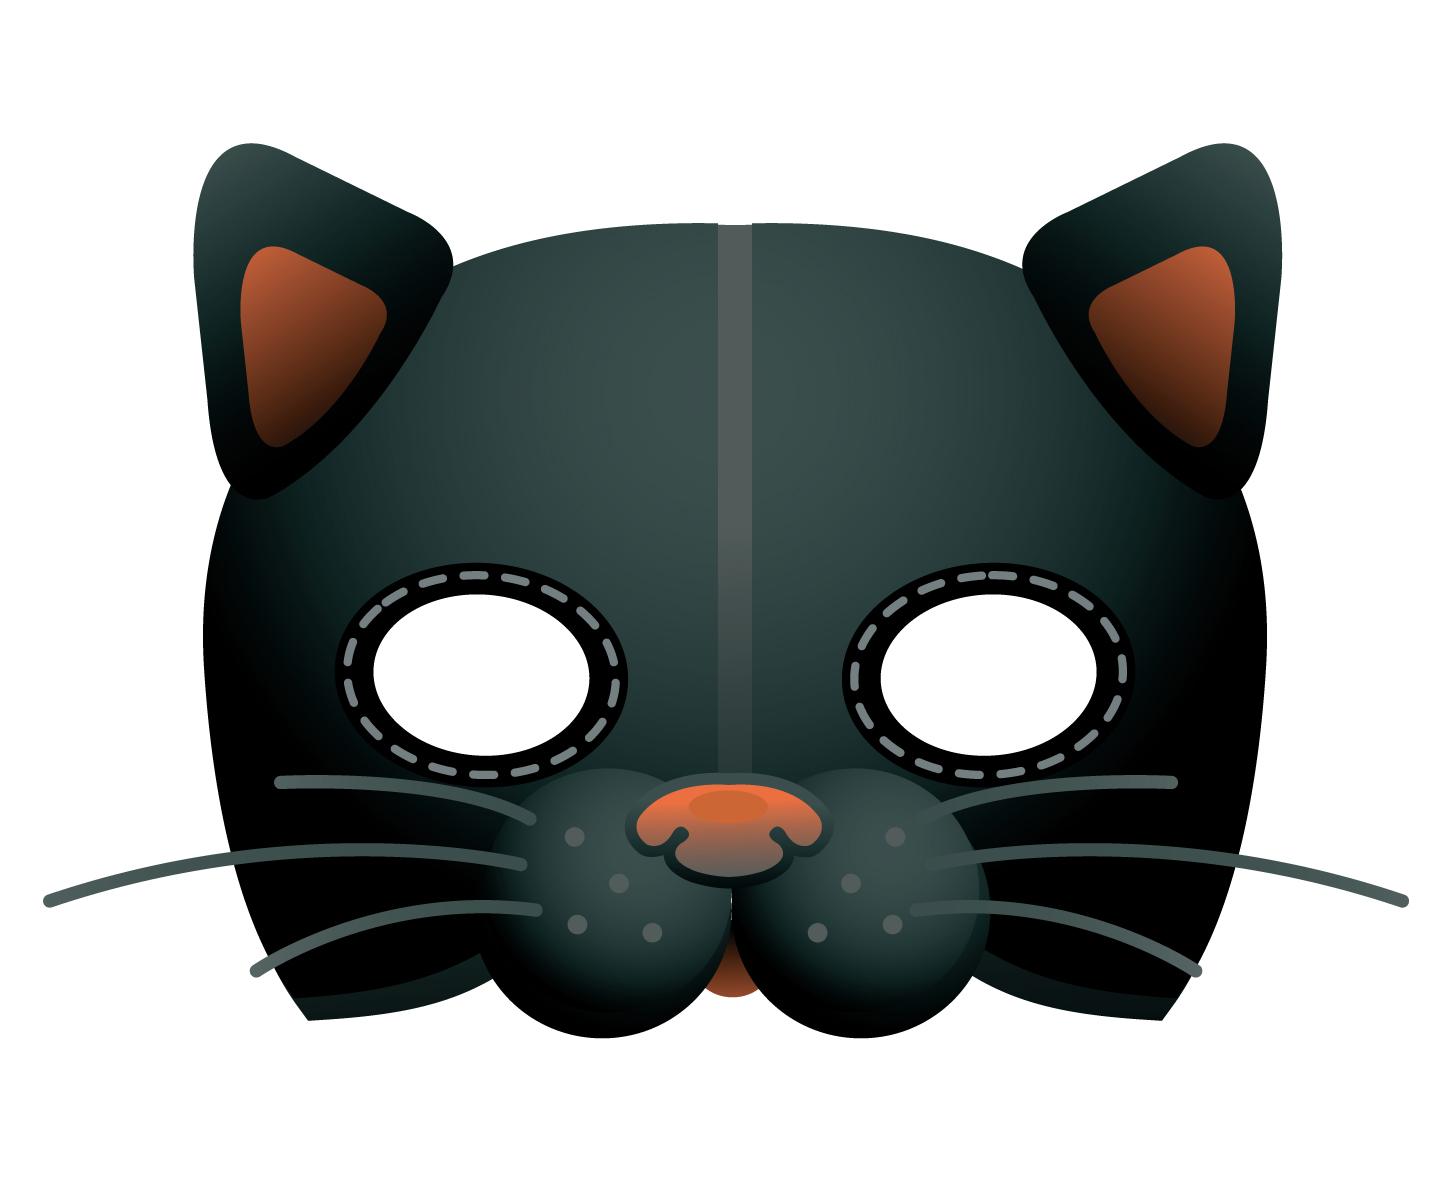 Маска кошки и хвост. Маска кота Базилио на голову. Новогодние маски. Маска кошки. Маска кота для детей.